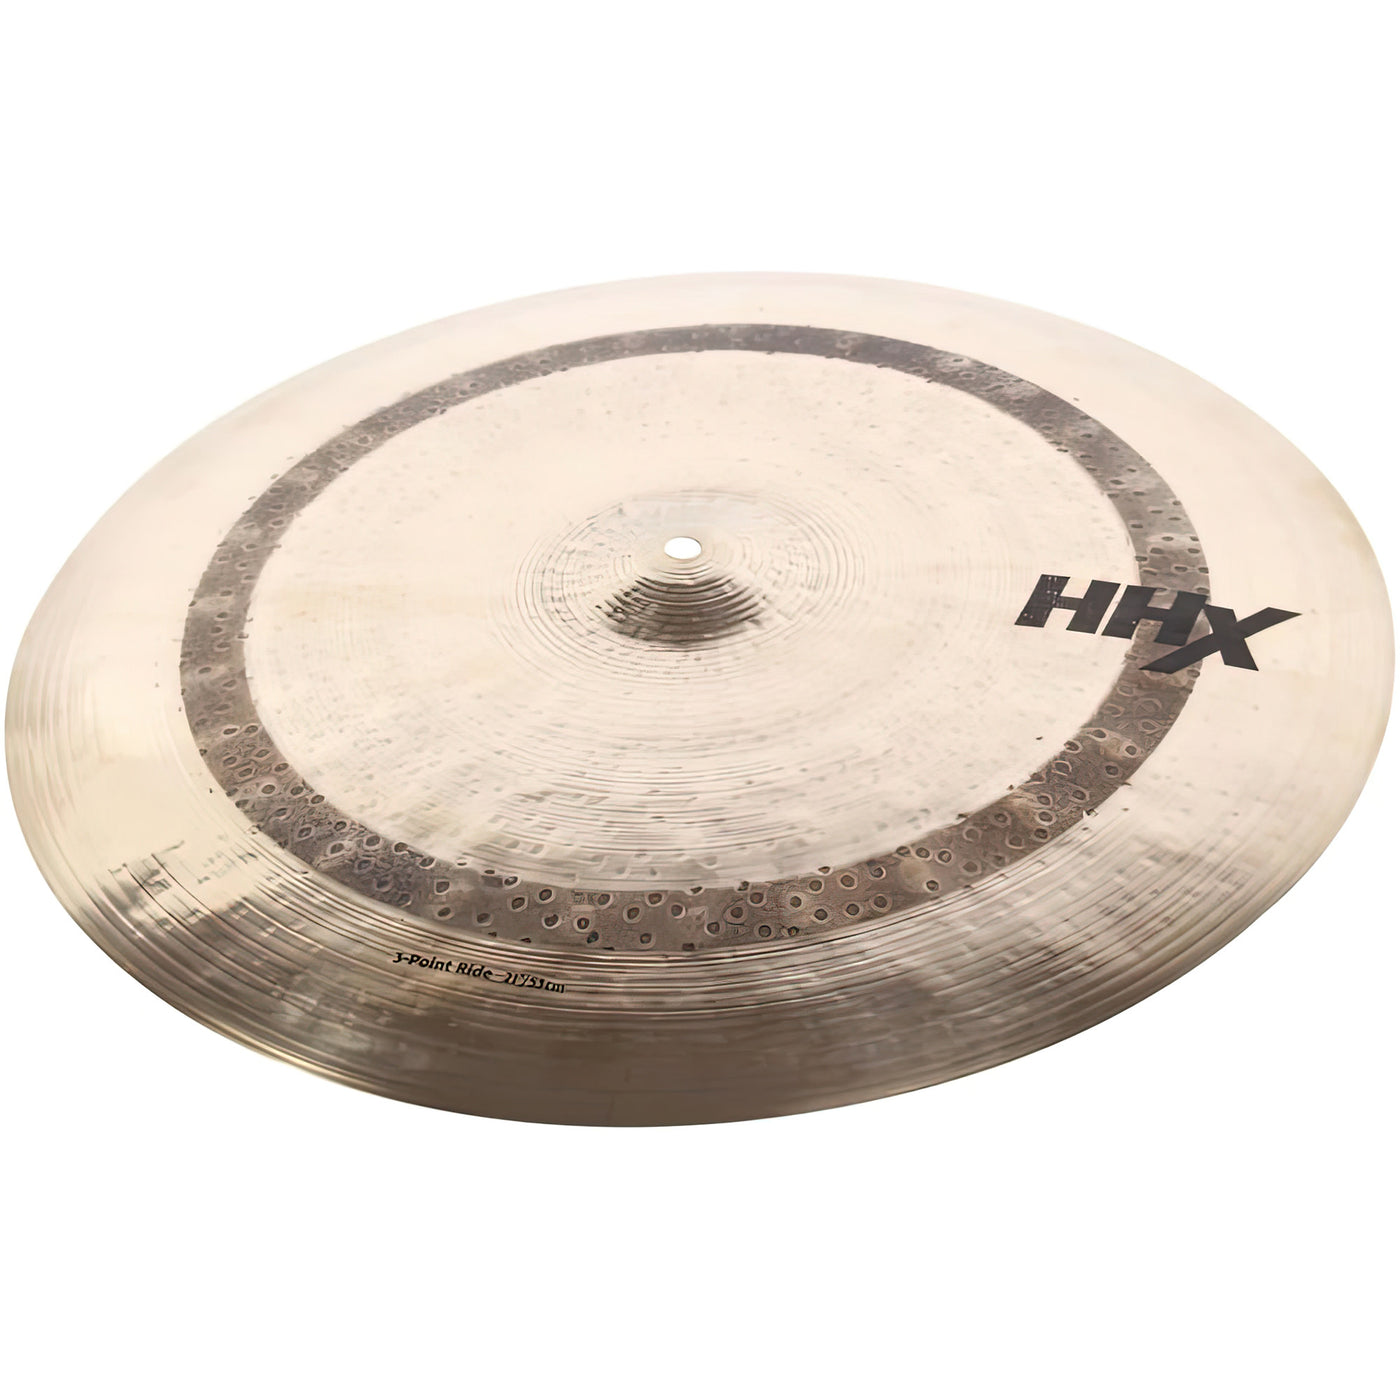 Sabian 21-Inch HHX 3-Point Ride Cymbal, Brilliant Finish (12118XBJD)